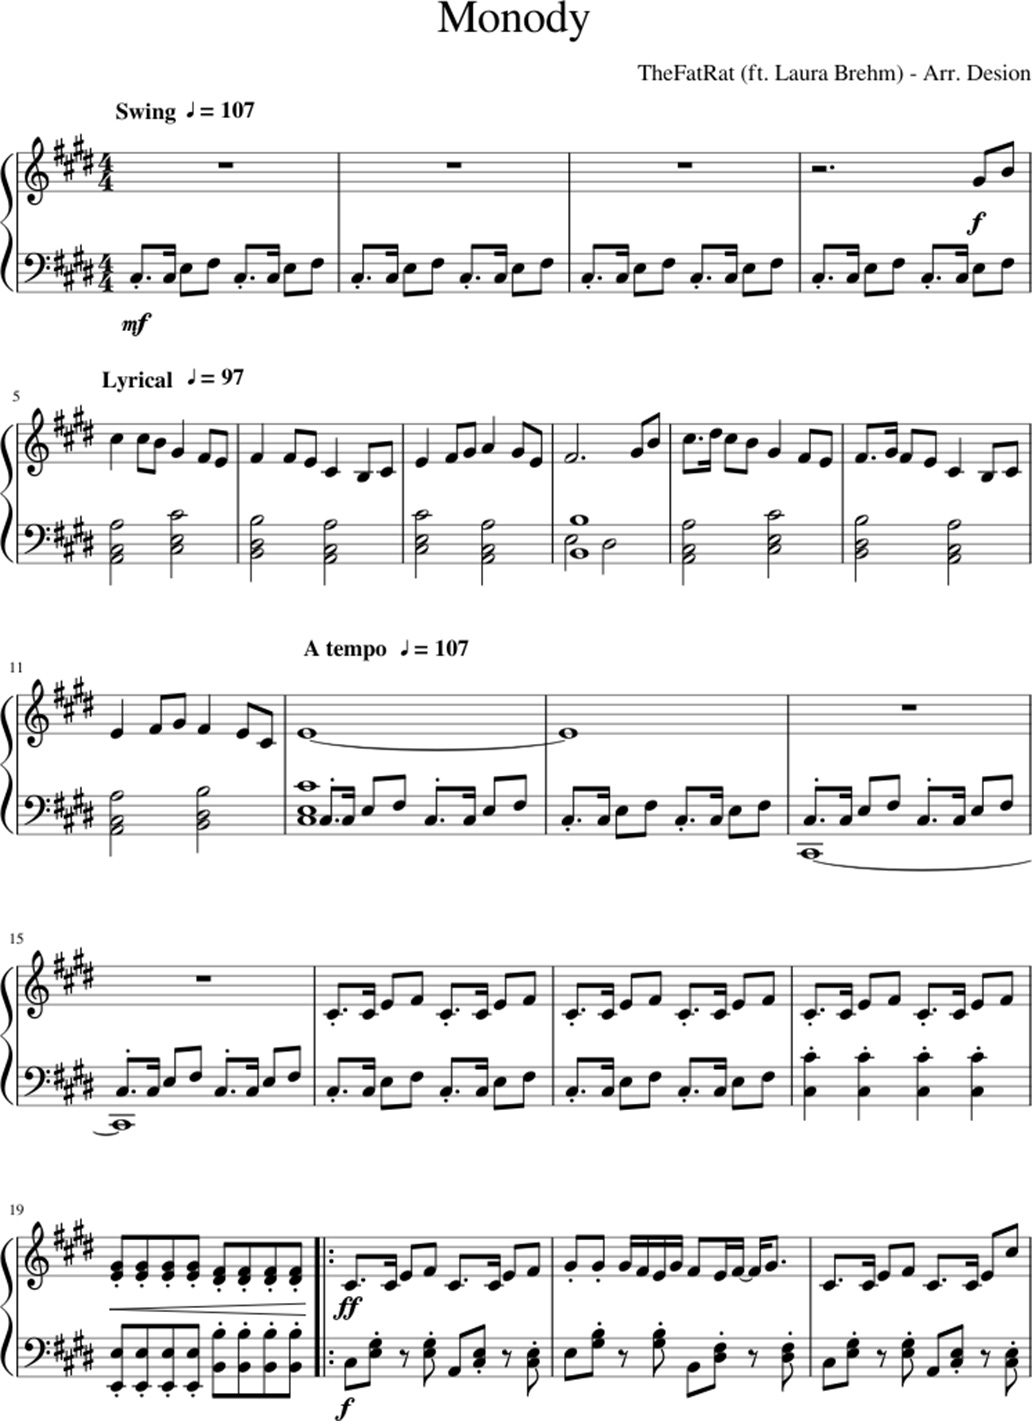 Monody sheet music notes 1